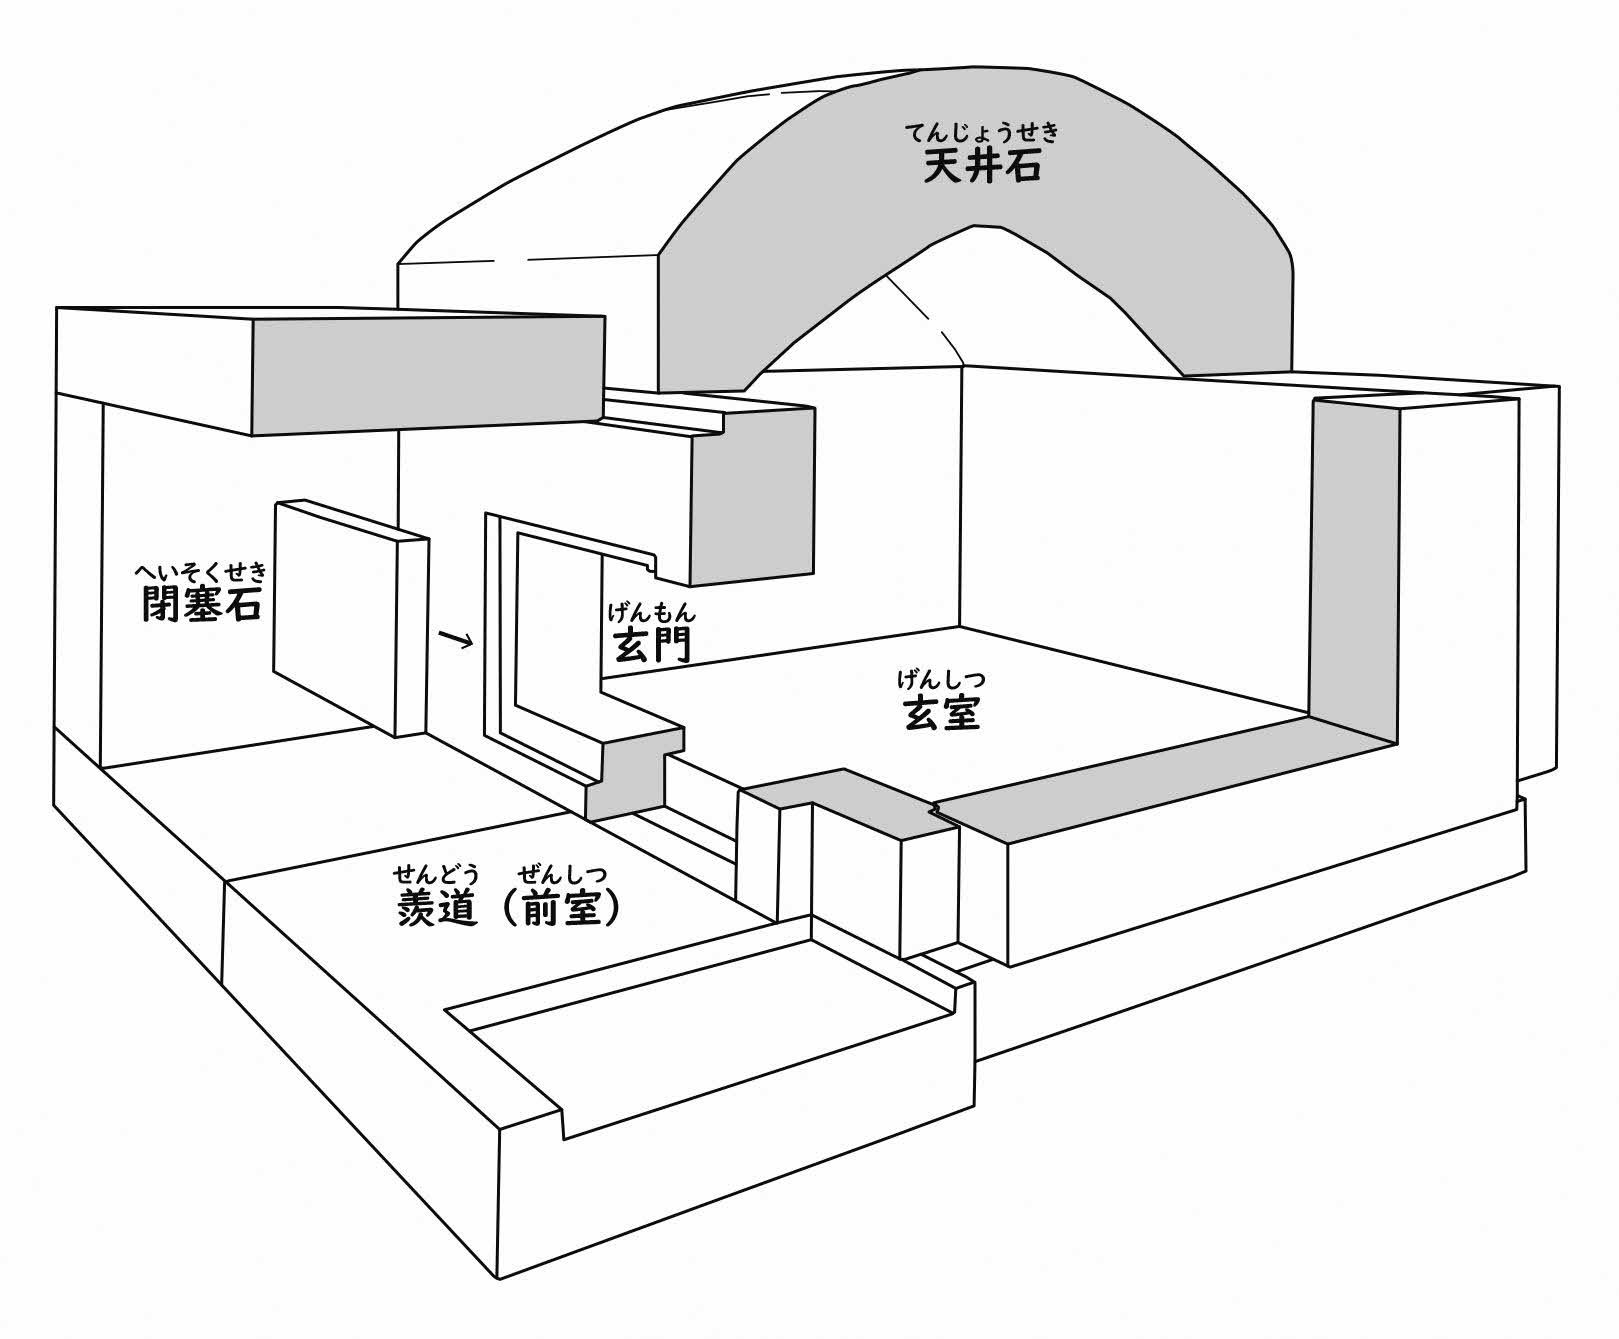 石棺式石室の模式図